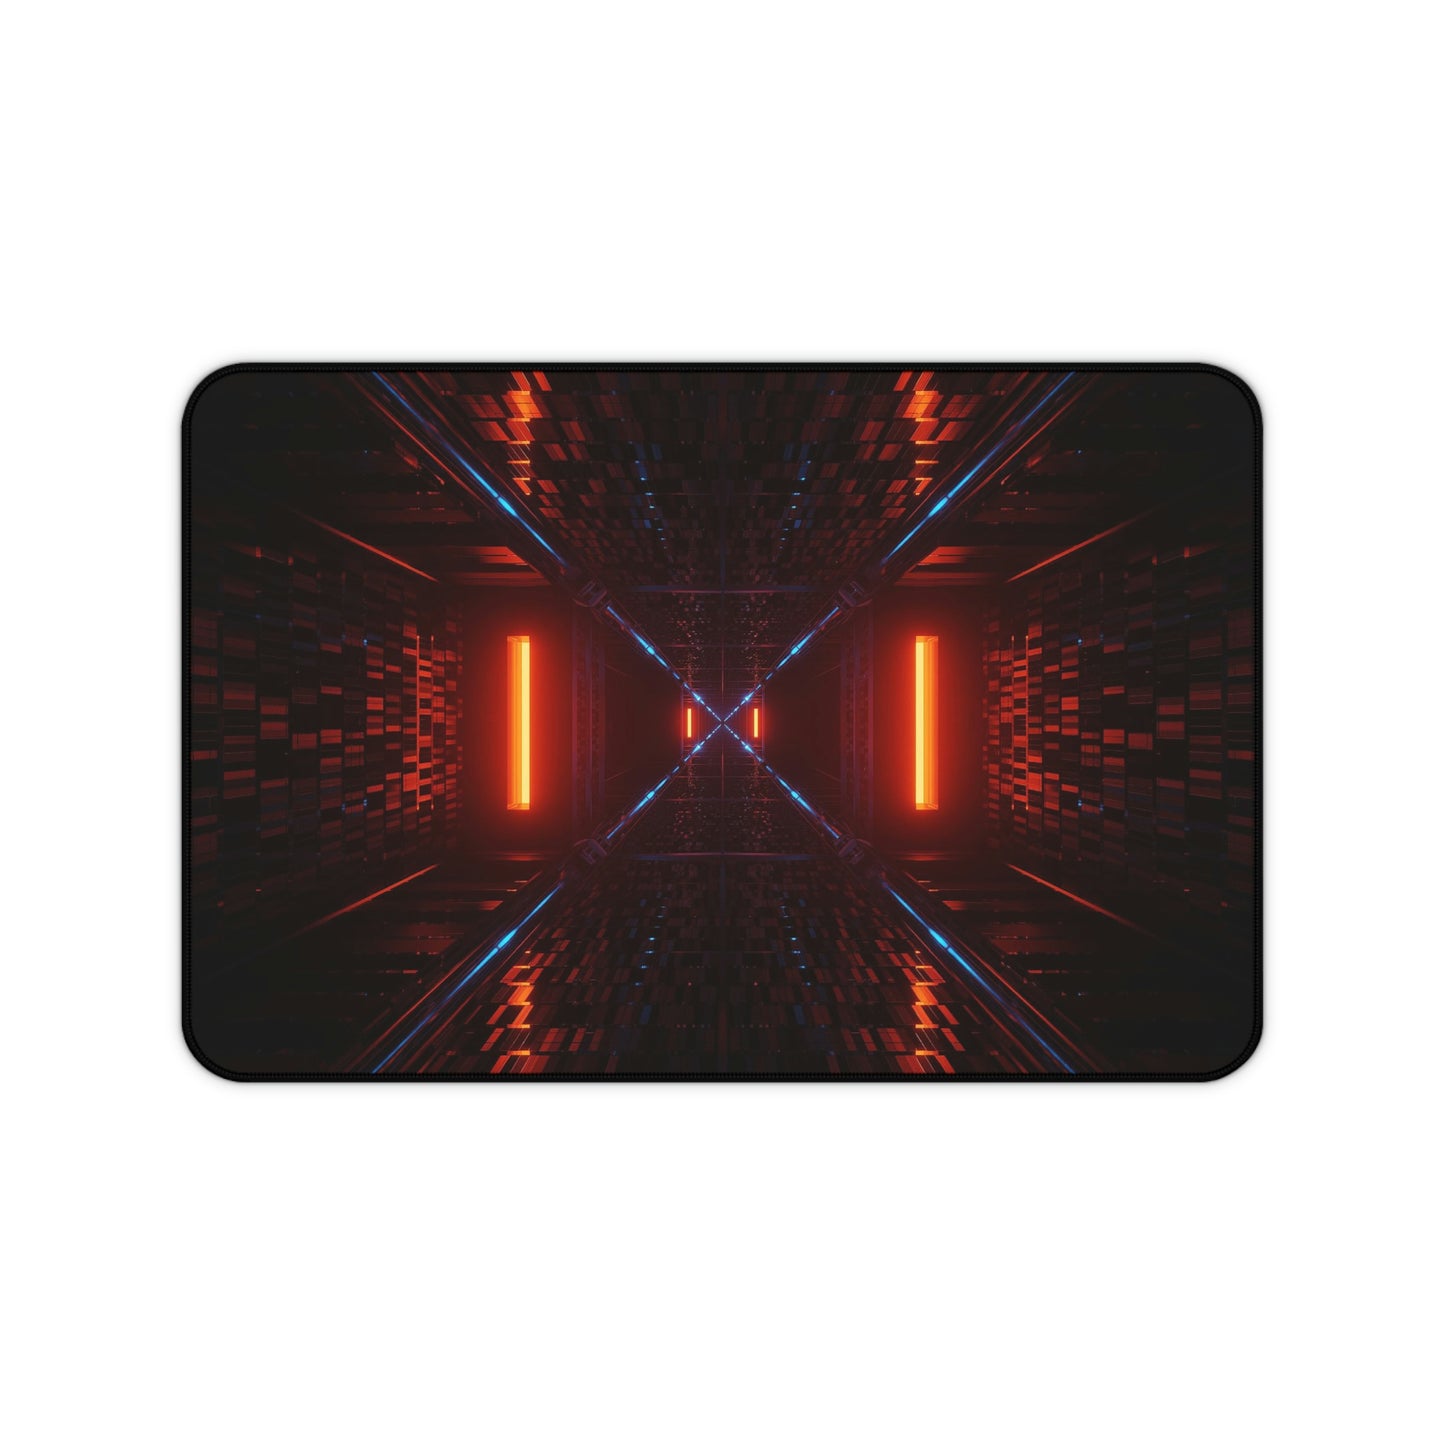 Neon Futuristic Gaming Mouse Pad